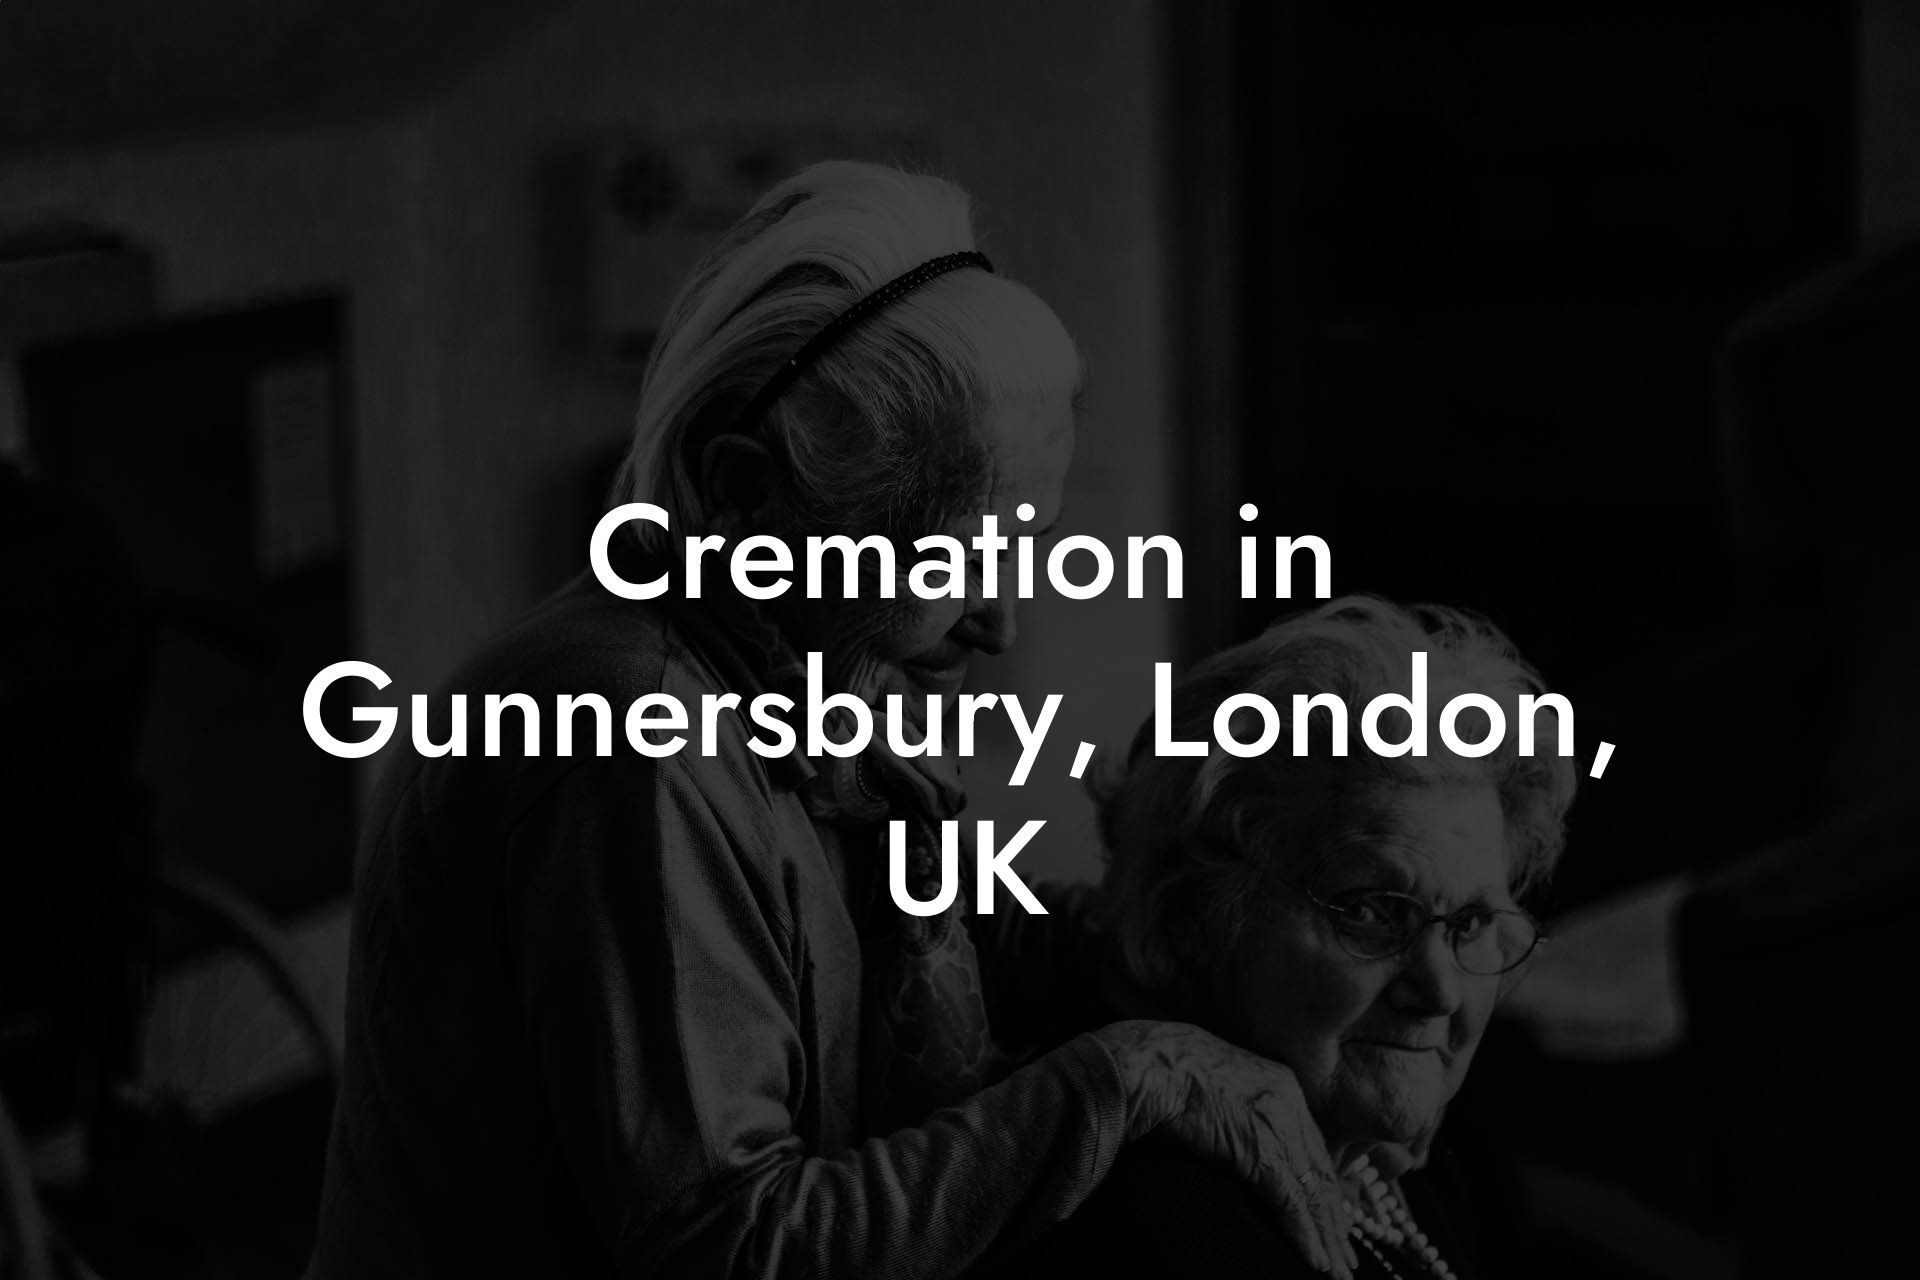 Cremation in Gunnersbury, London, UK